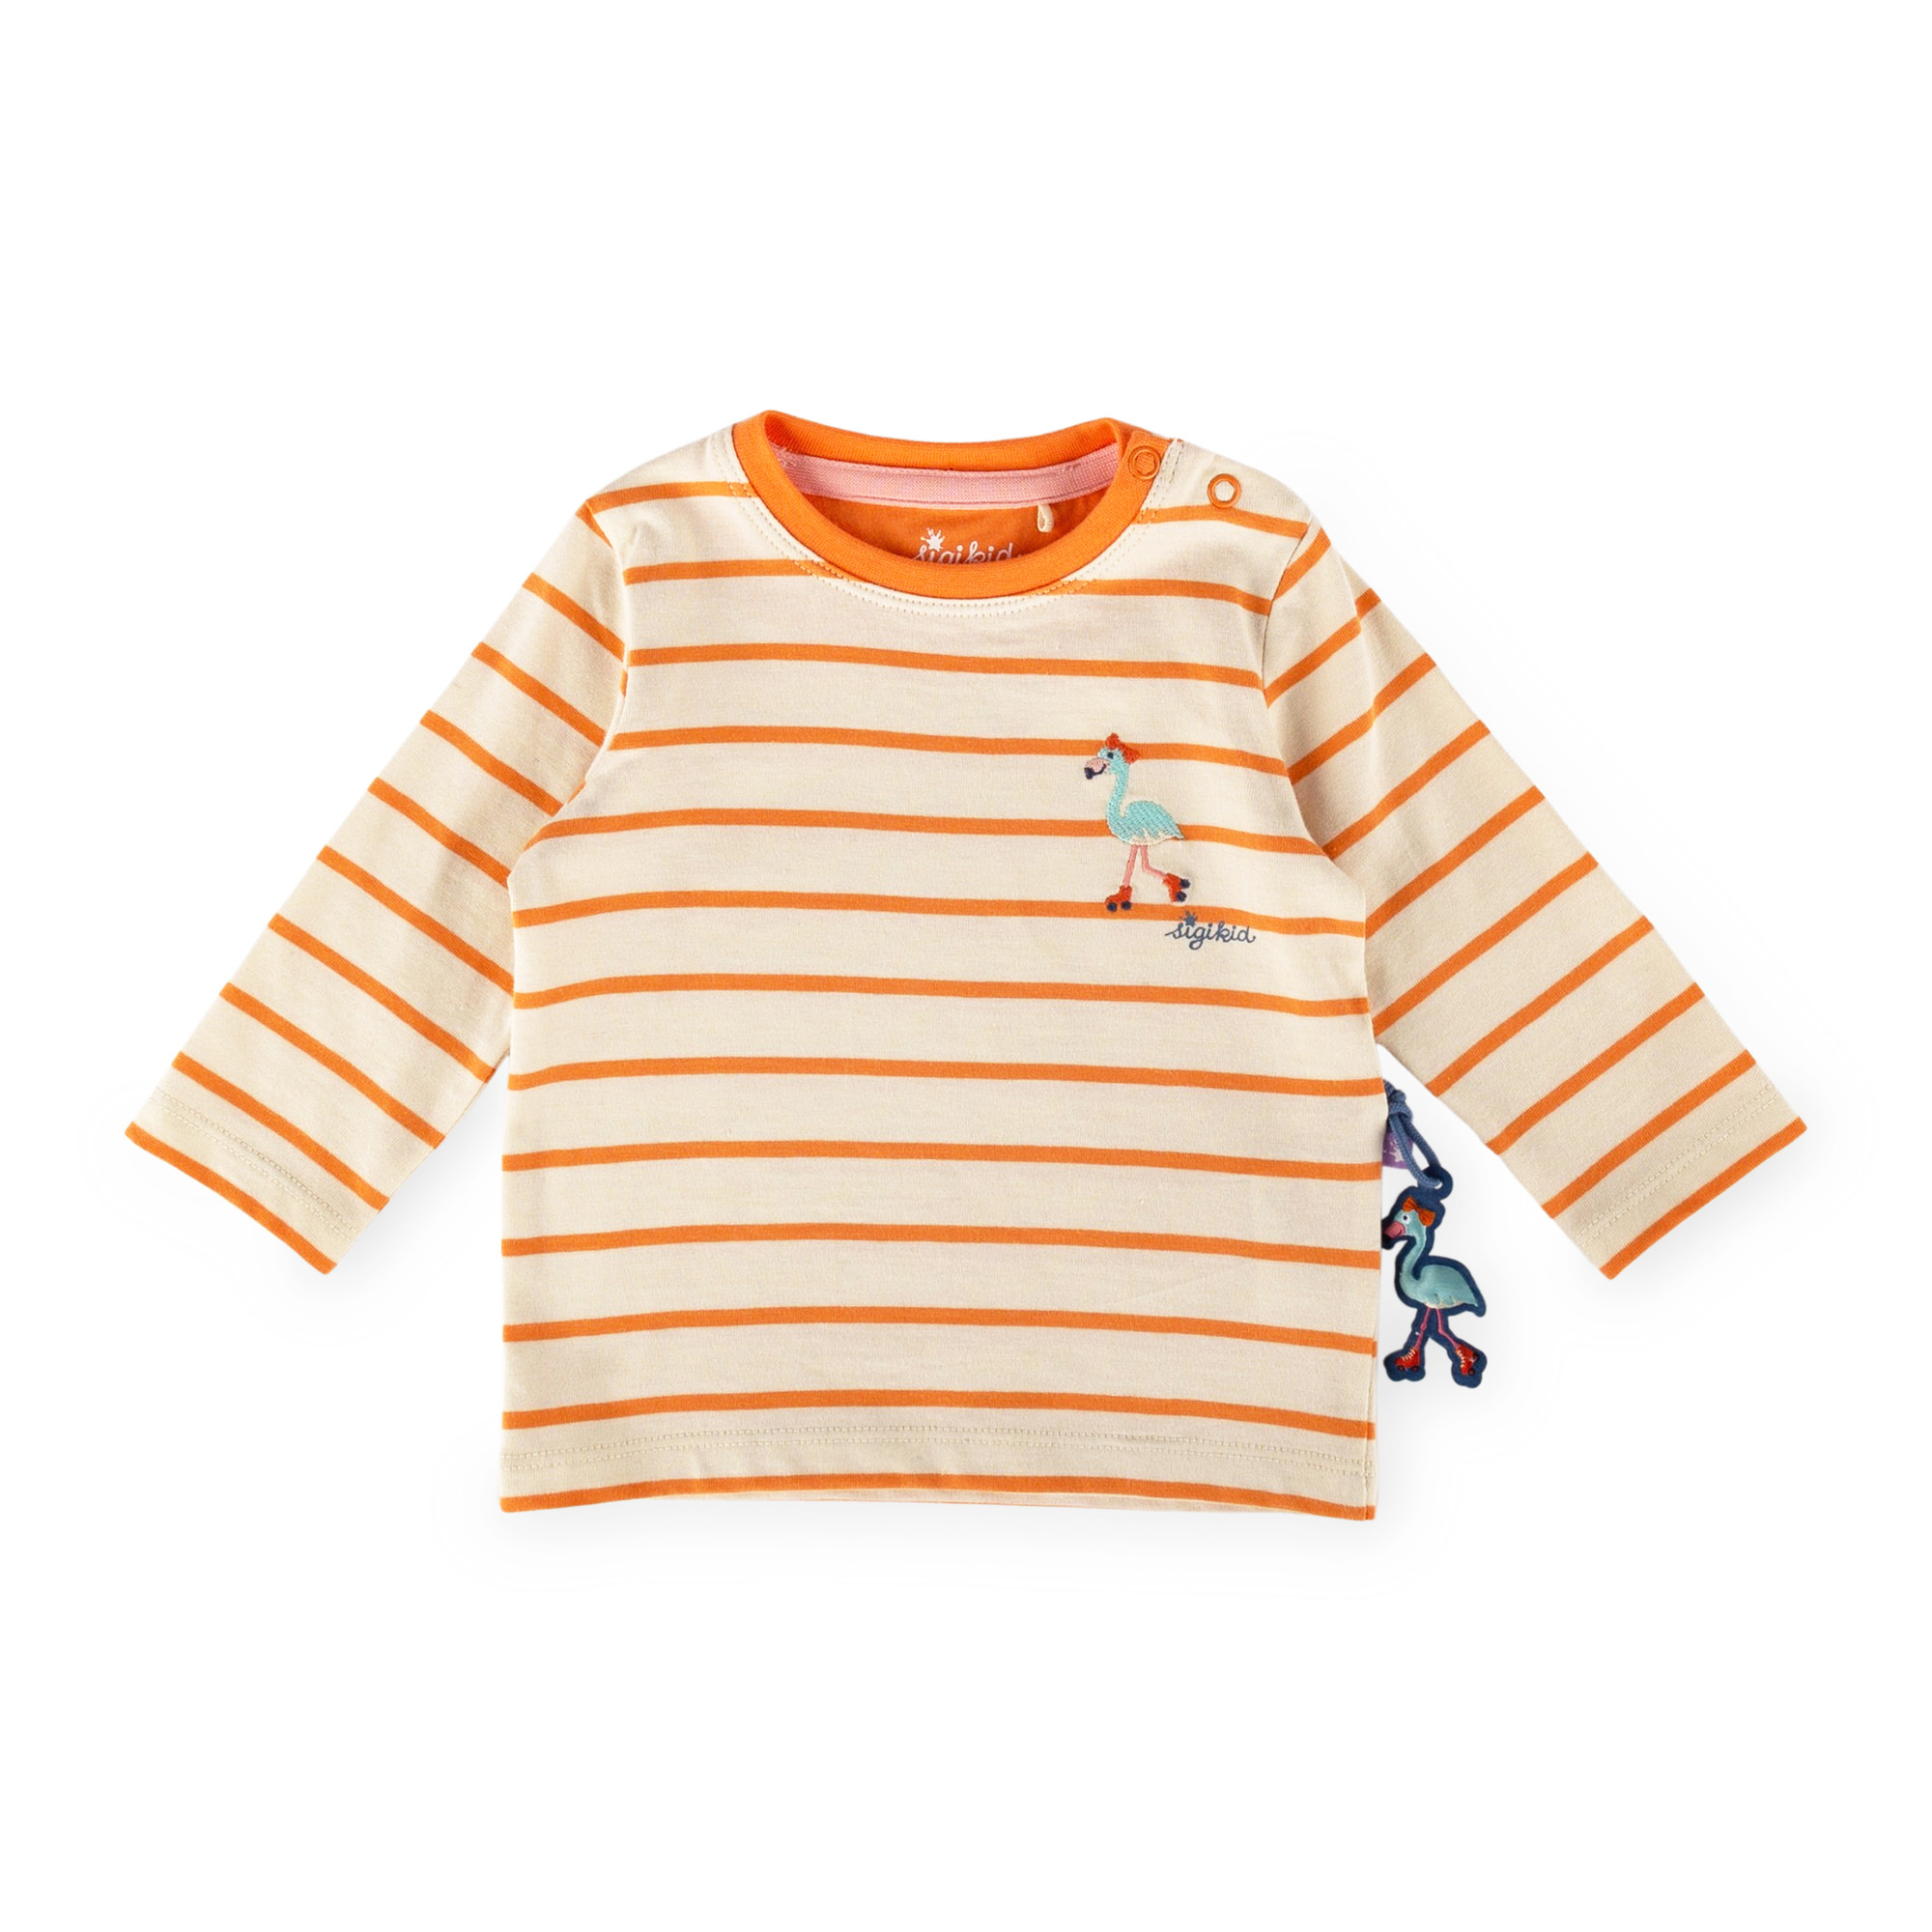 Baby Langarm Ringelshirt, orange-weiß